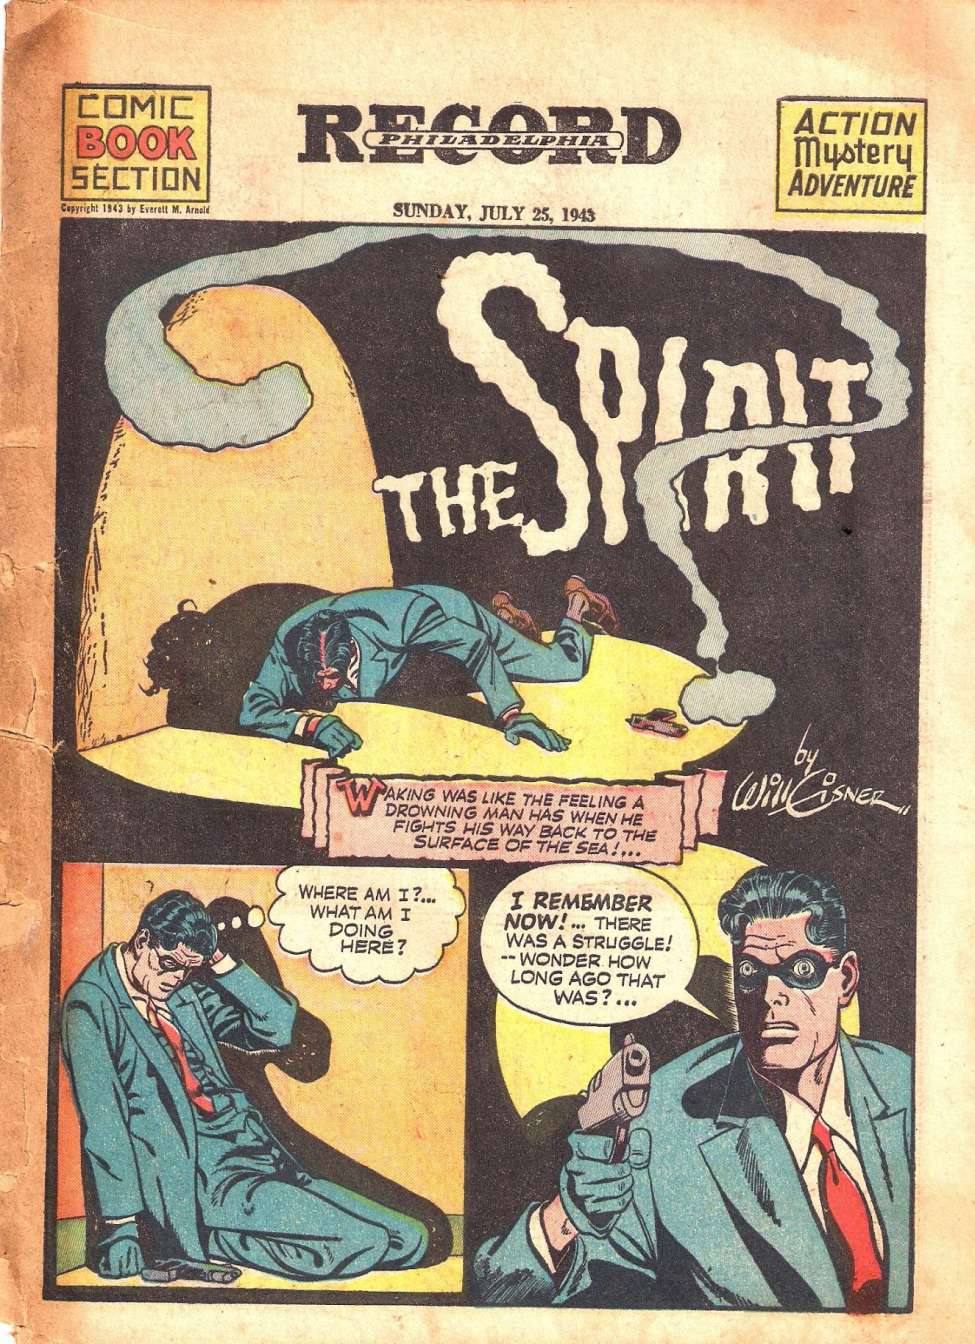 Comic Book Cover For The Spirit (1943-07-25) - Philadelphia Record